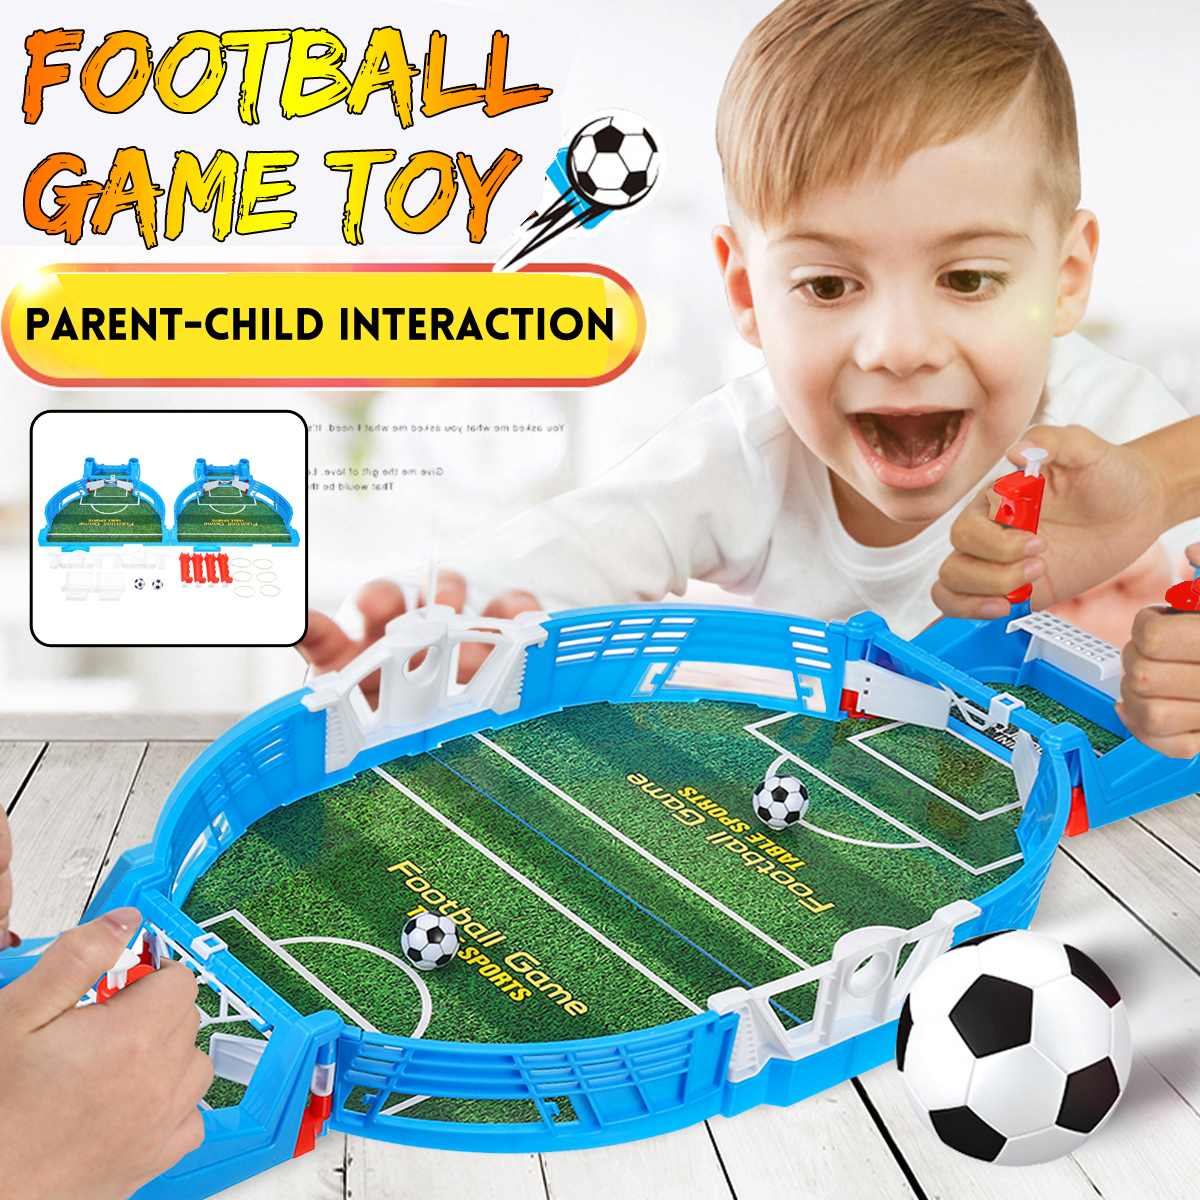 Mini Soccer Game - Home Essentials Store Retail